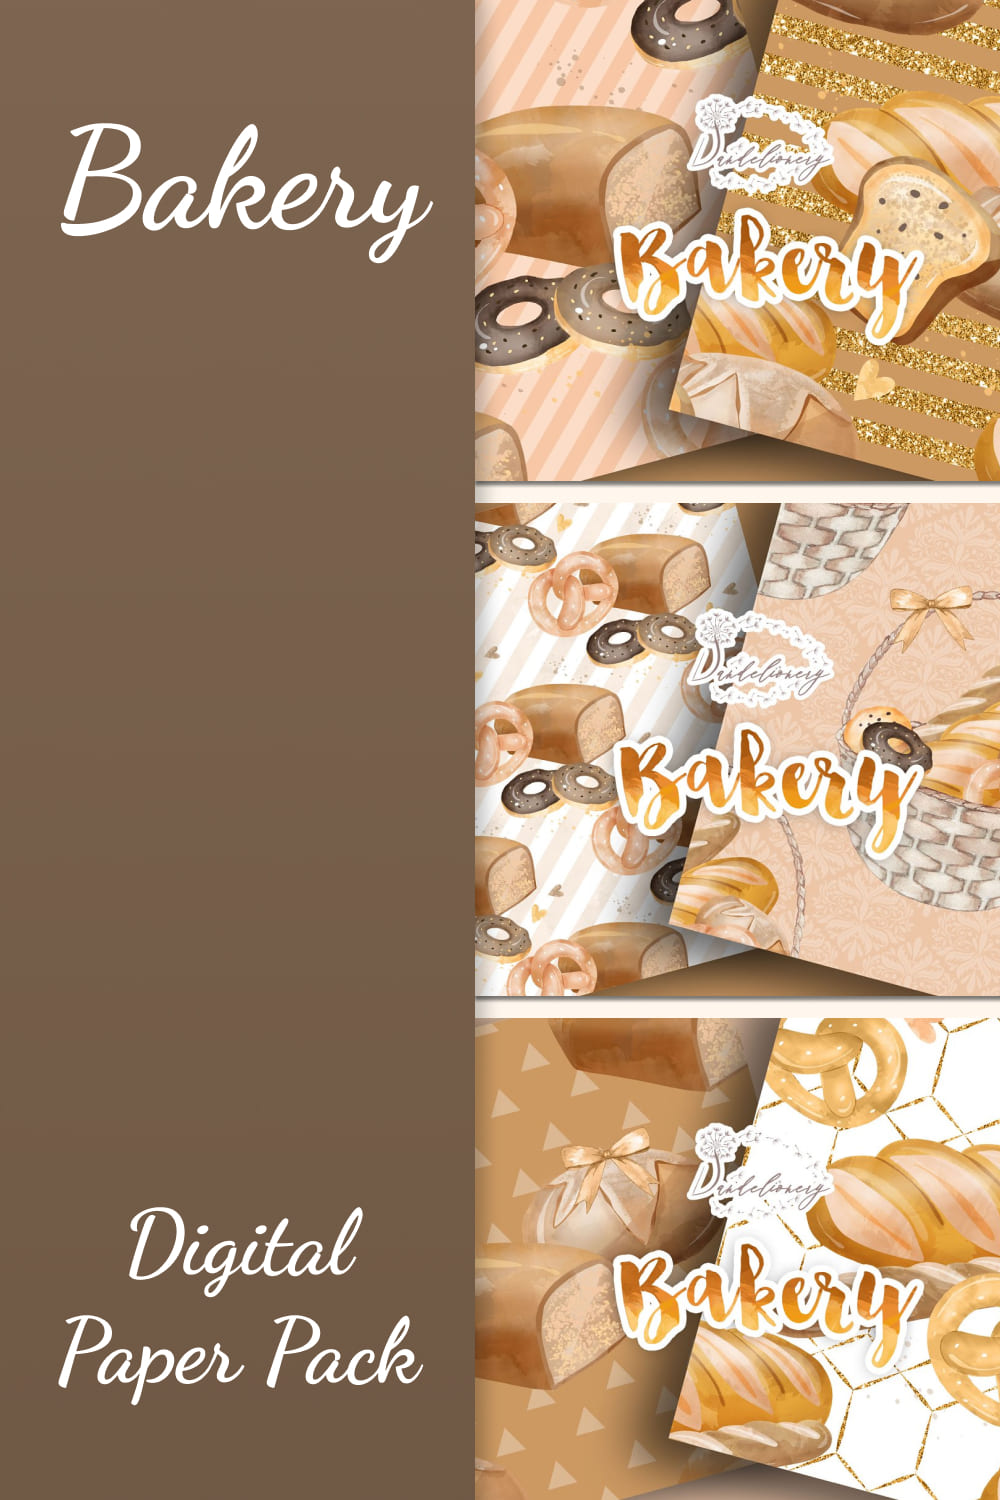 Bakery digital paper pack - pinterest image preview.